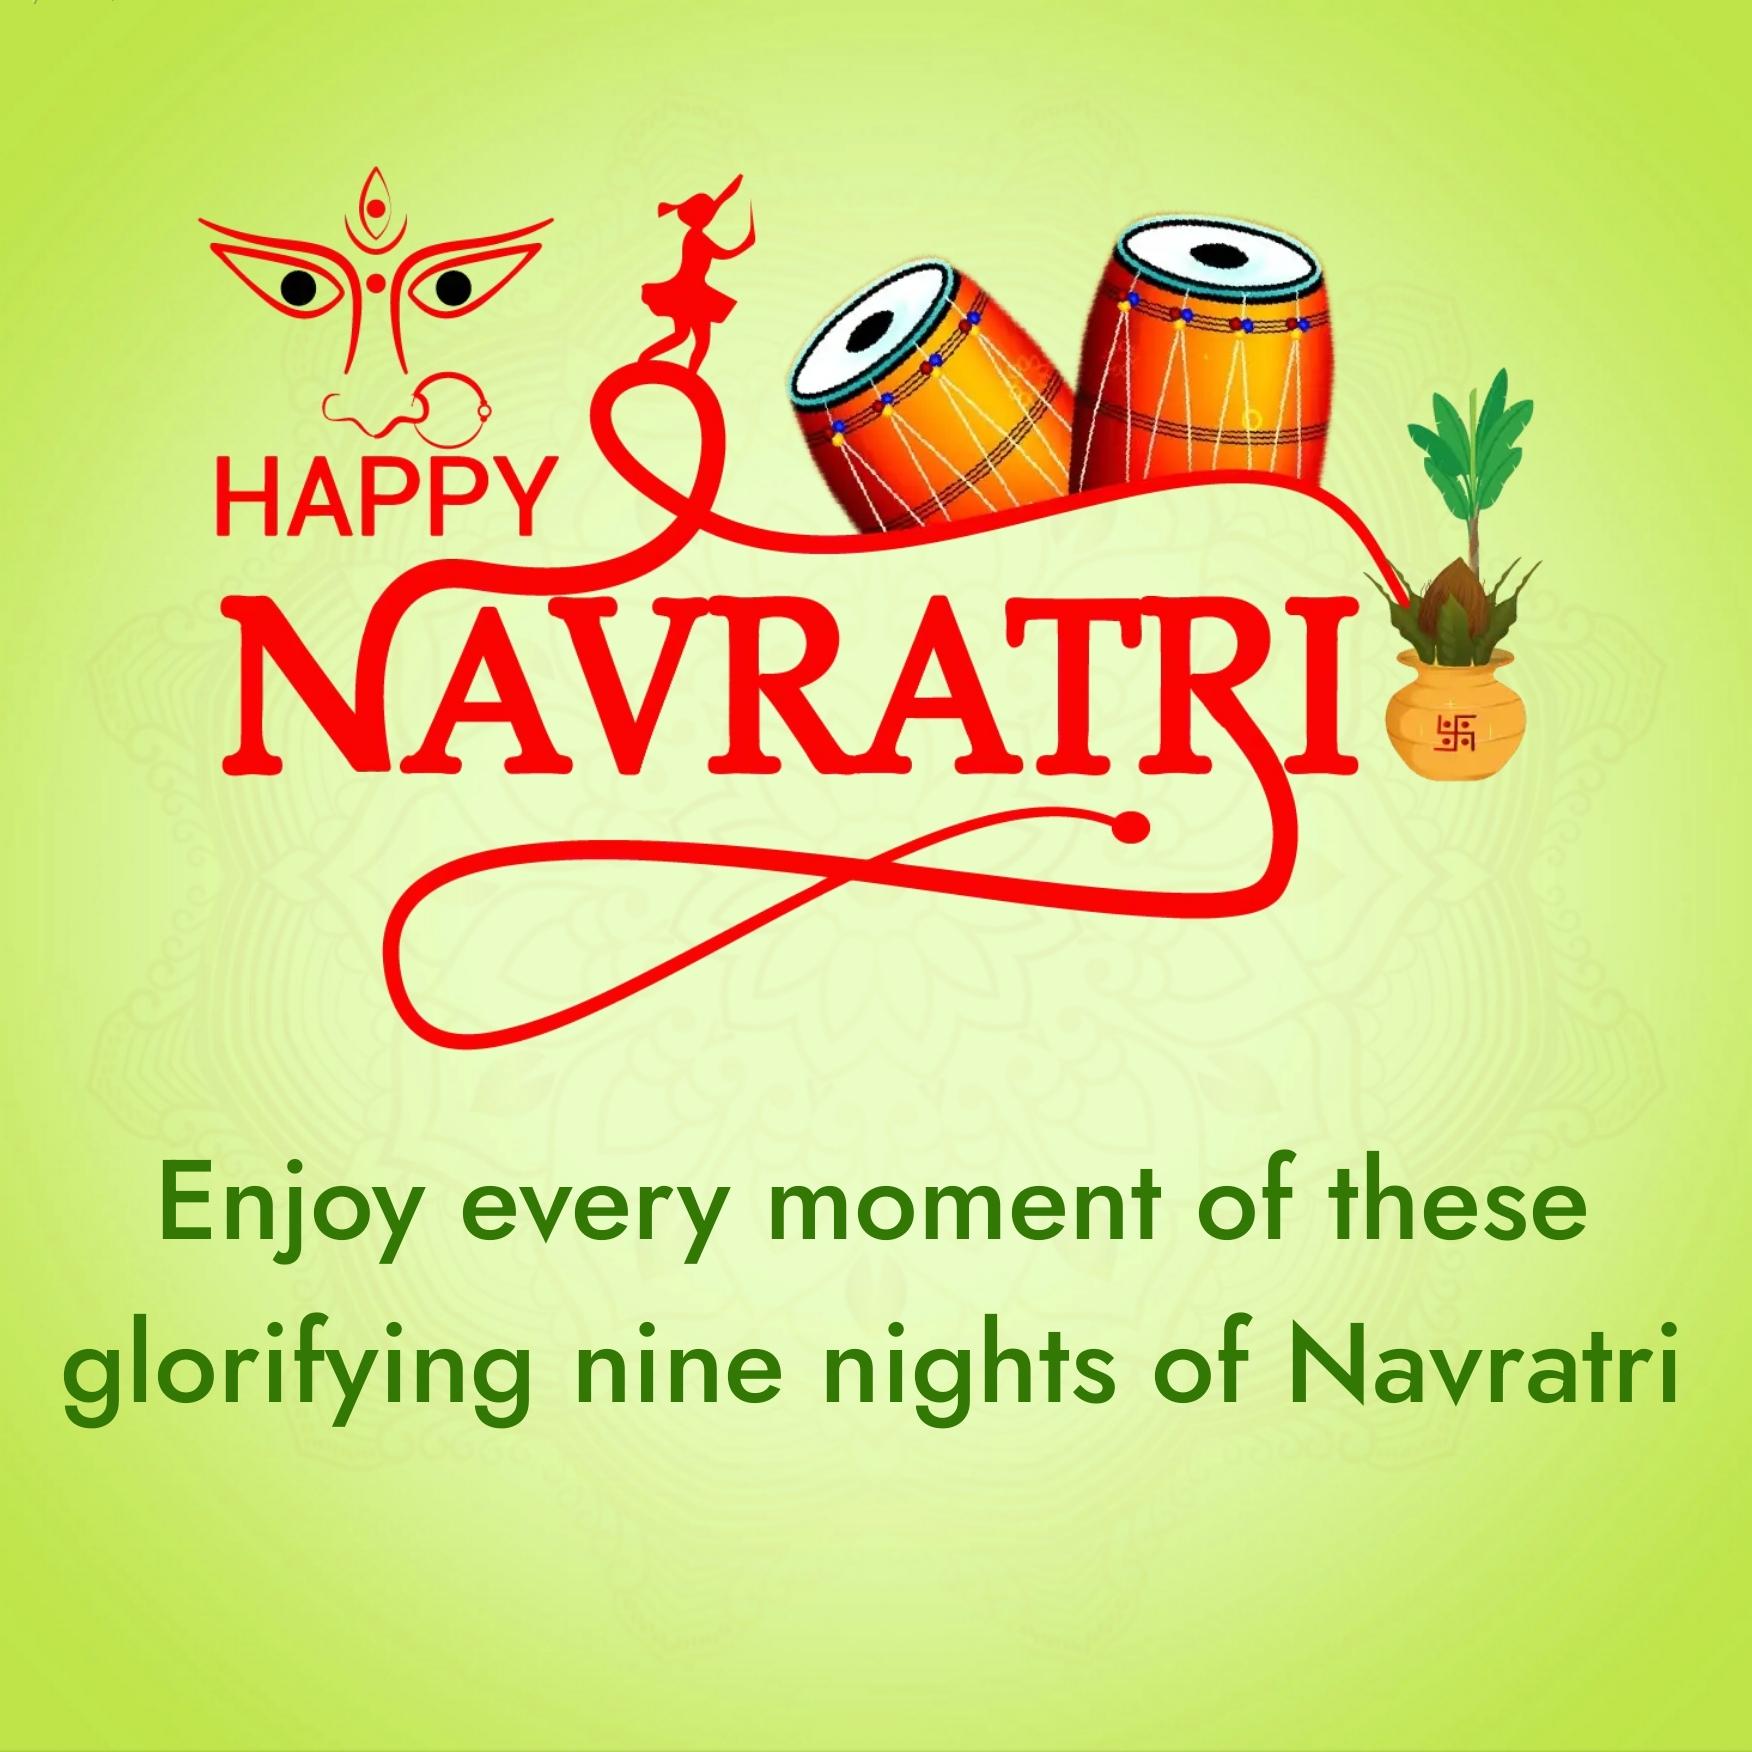 Enjoy every moment of these glorifying nine nights of Navratri